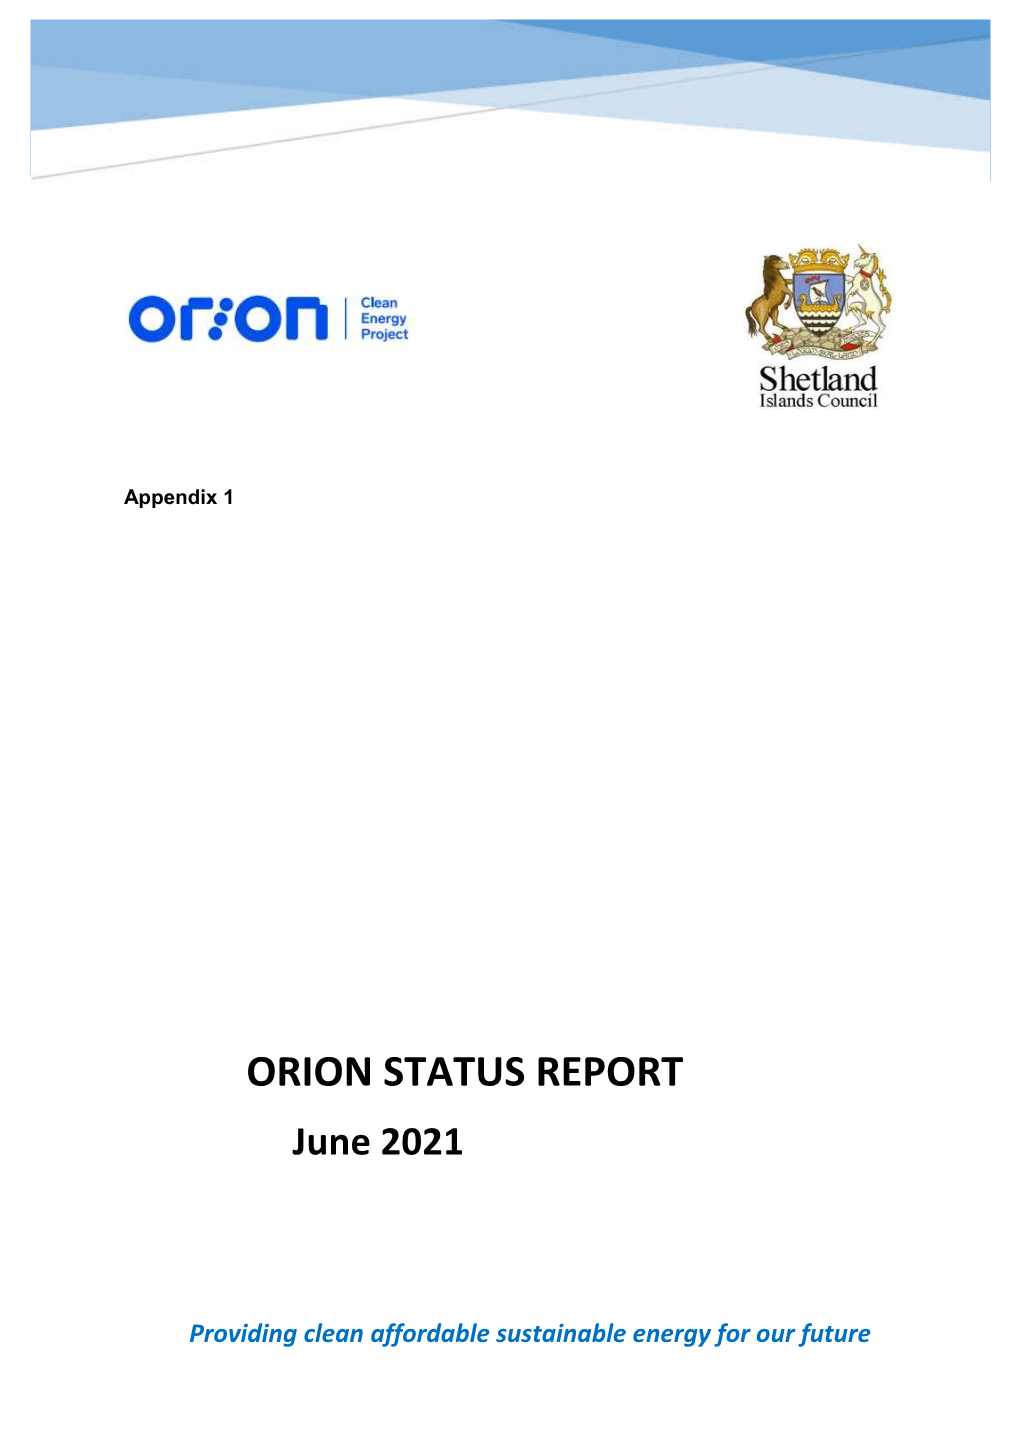 ORION STATUS REPORT June 2021